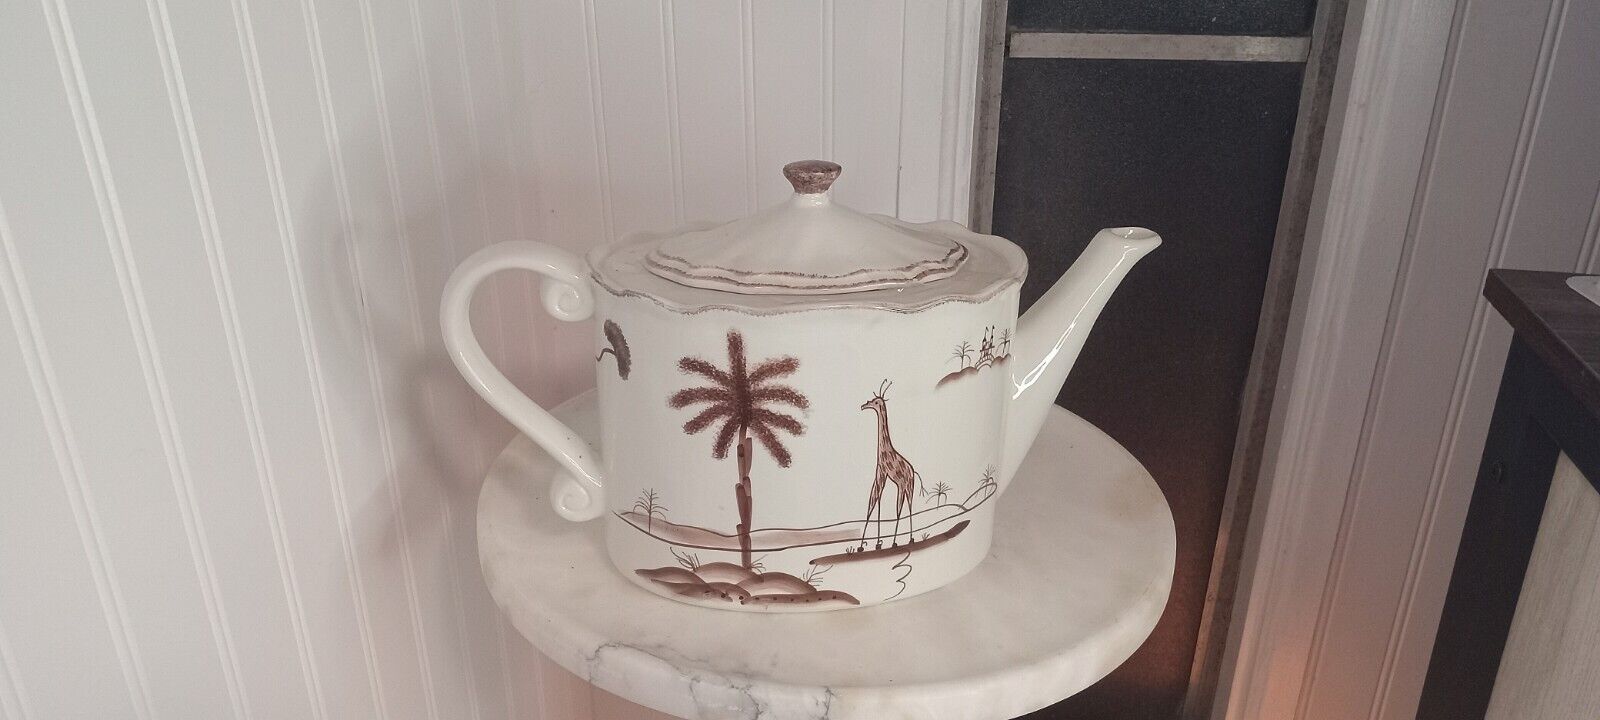 Style Eyes Baum Bros Elephant/Giraffe Teapot Tea Pot Animal Landscape 8 Cup 12x8